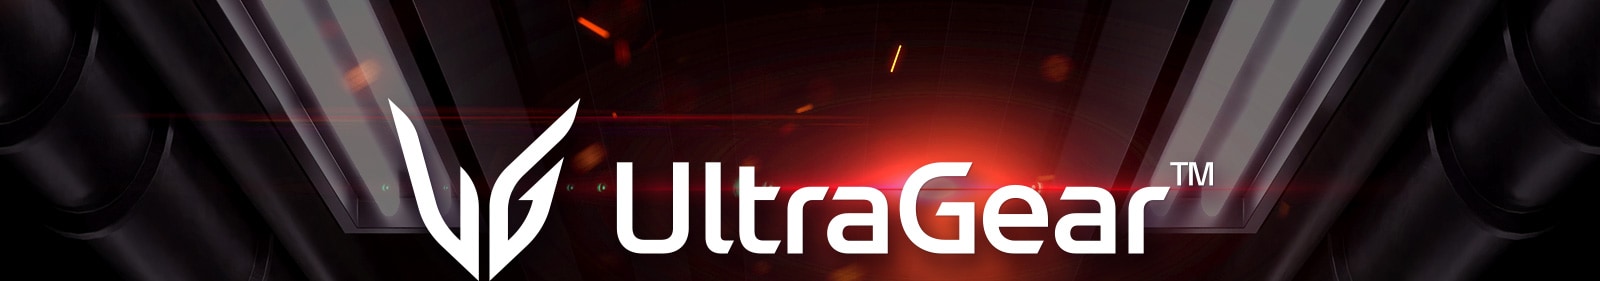 LG UltraGear monitor as the powerful gaming display